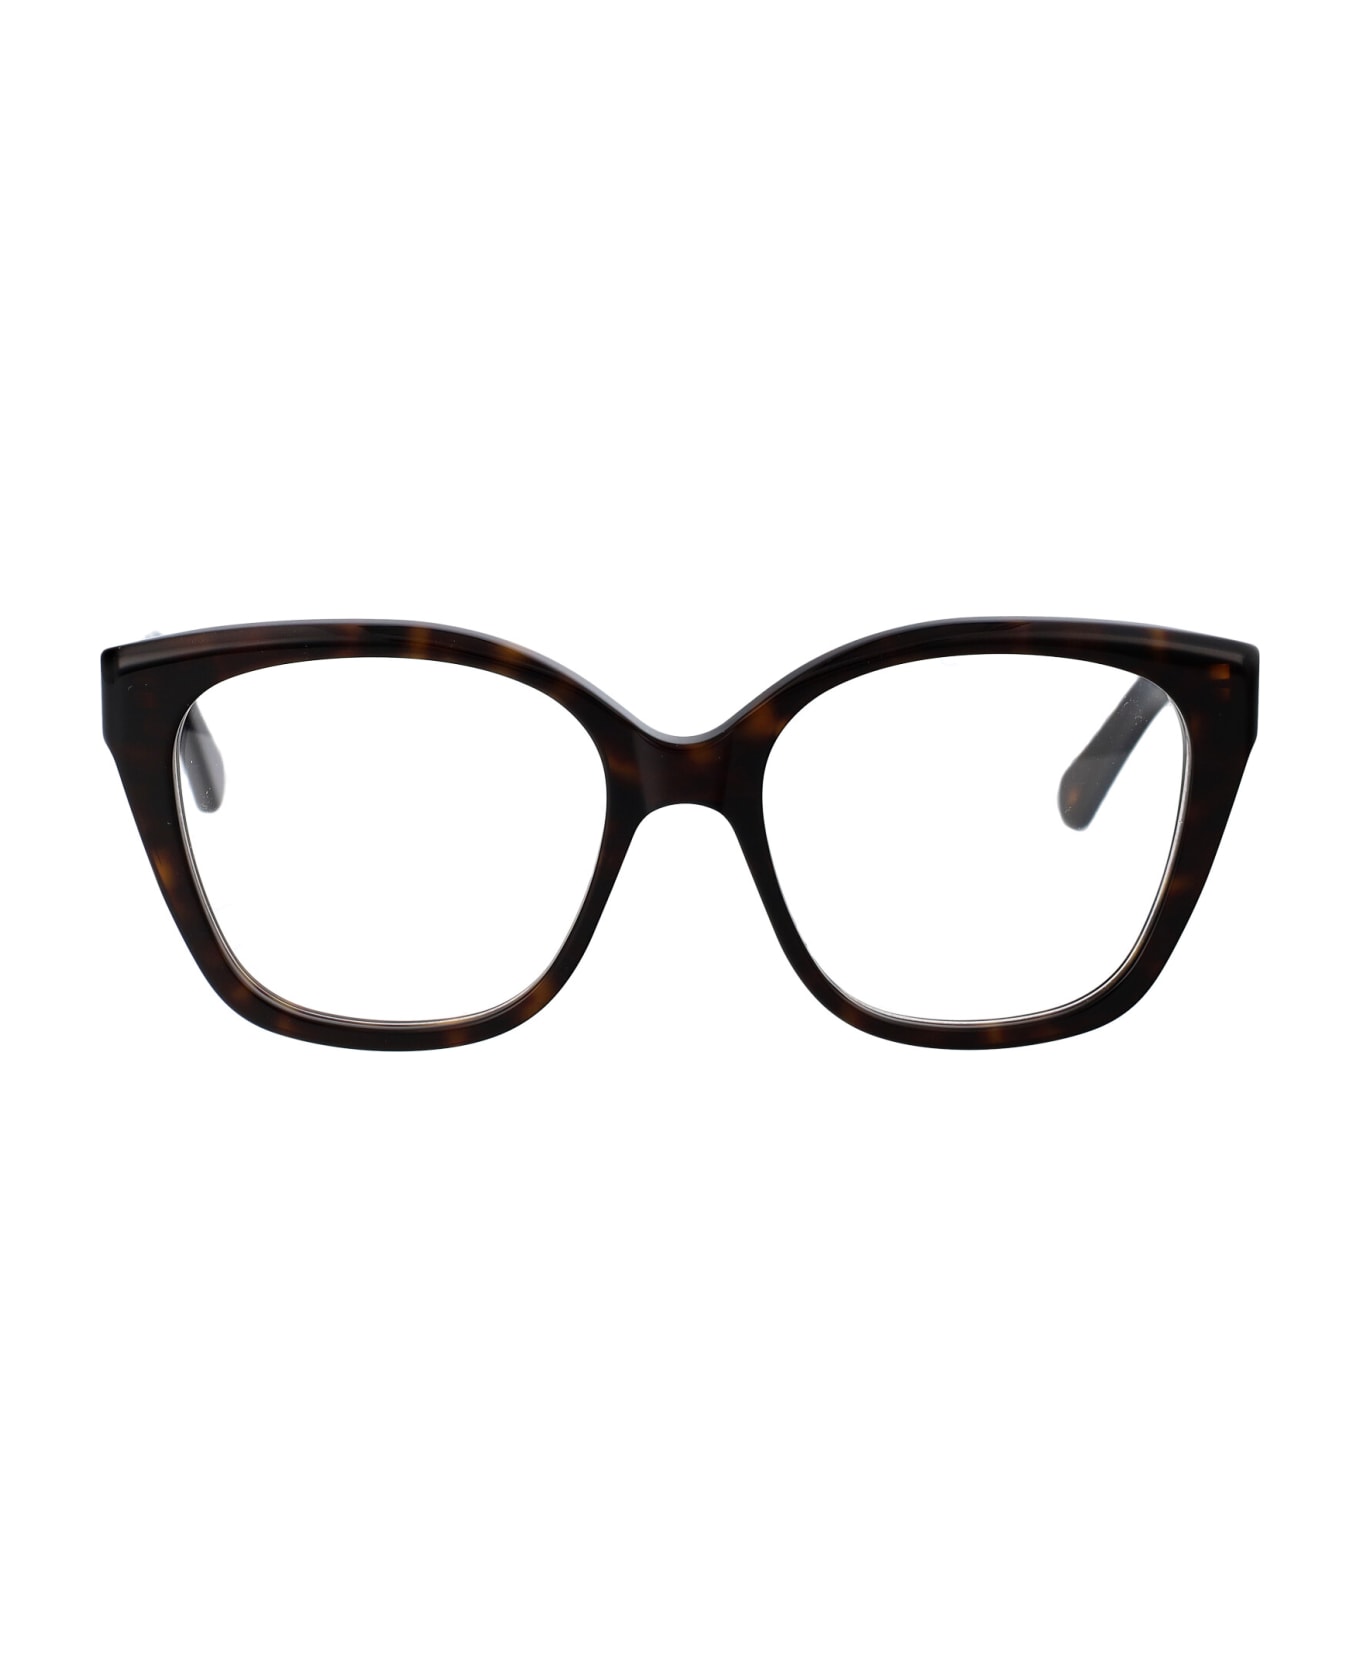 Chloé Eyewear Ch0241o Glasses - 002 HAVANA HAVANA TRANSPARENT